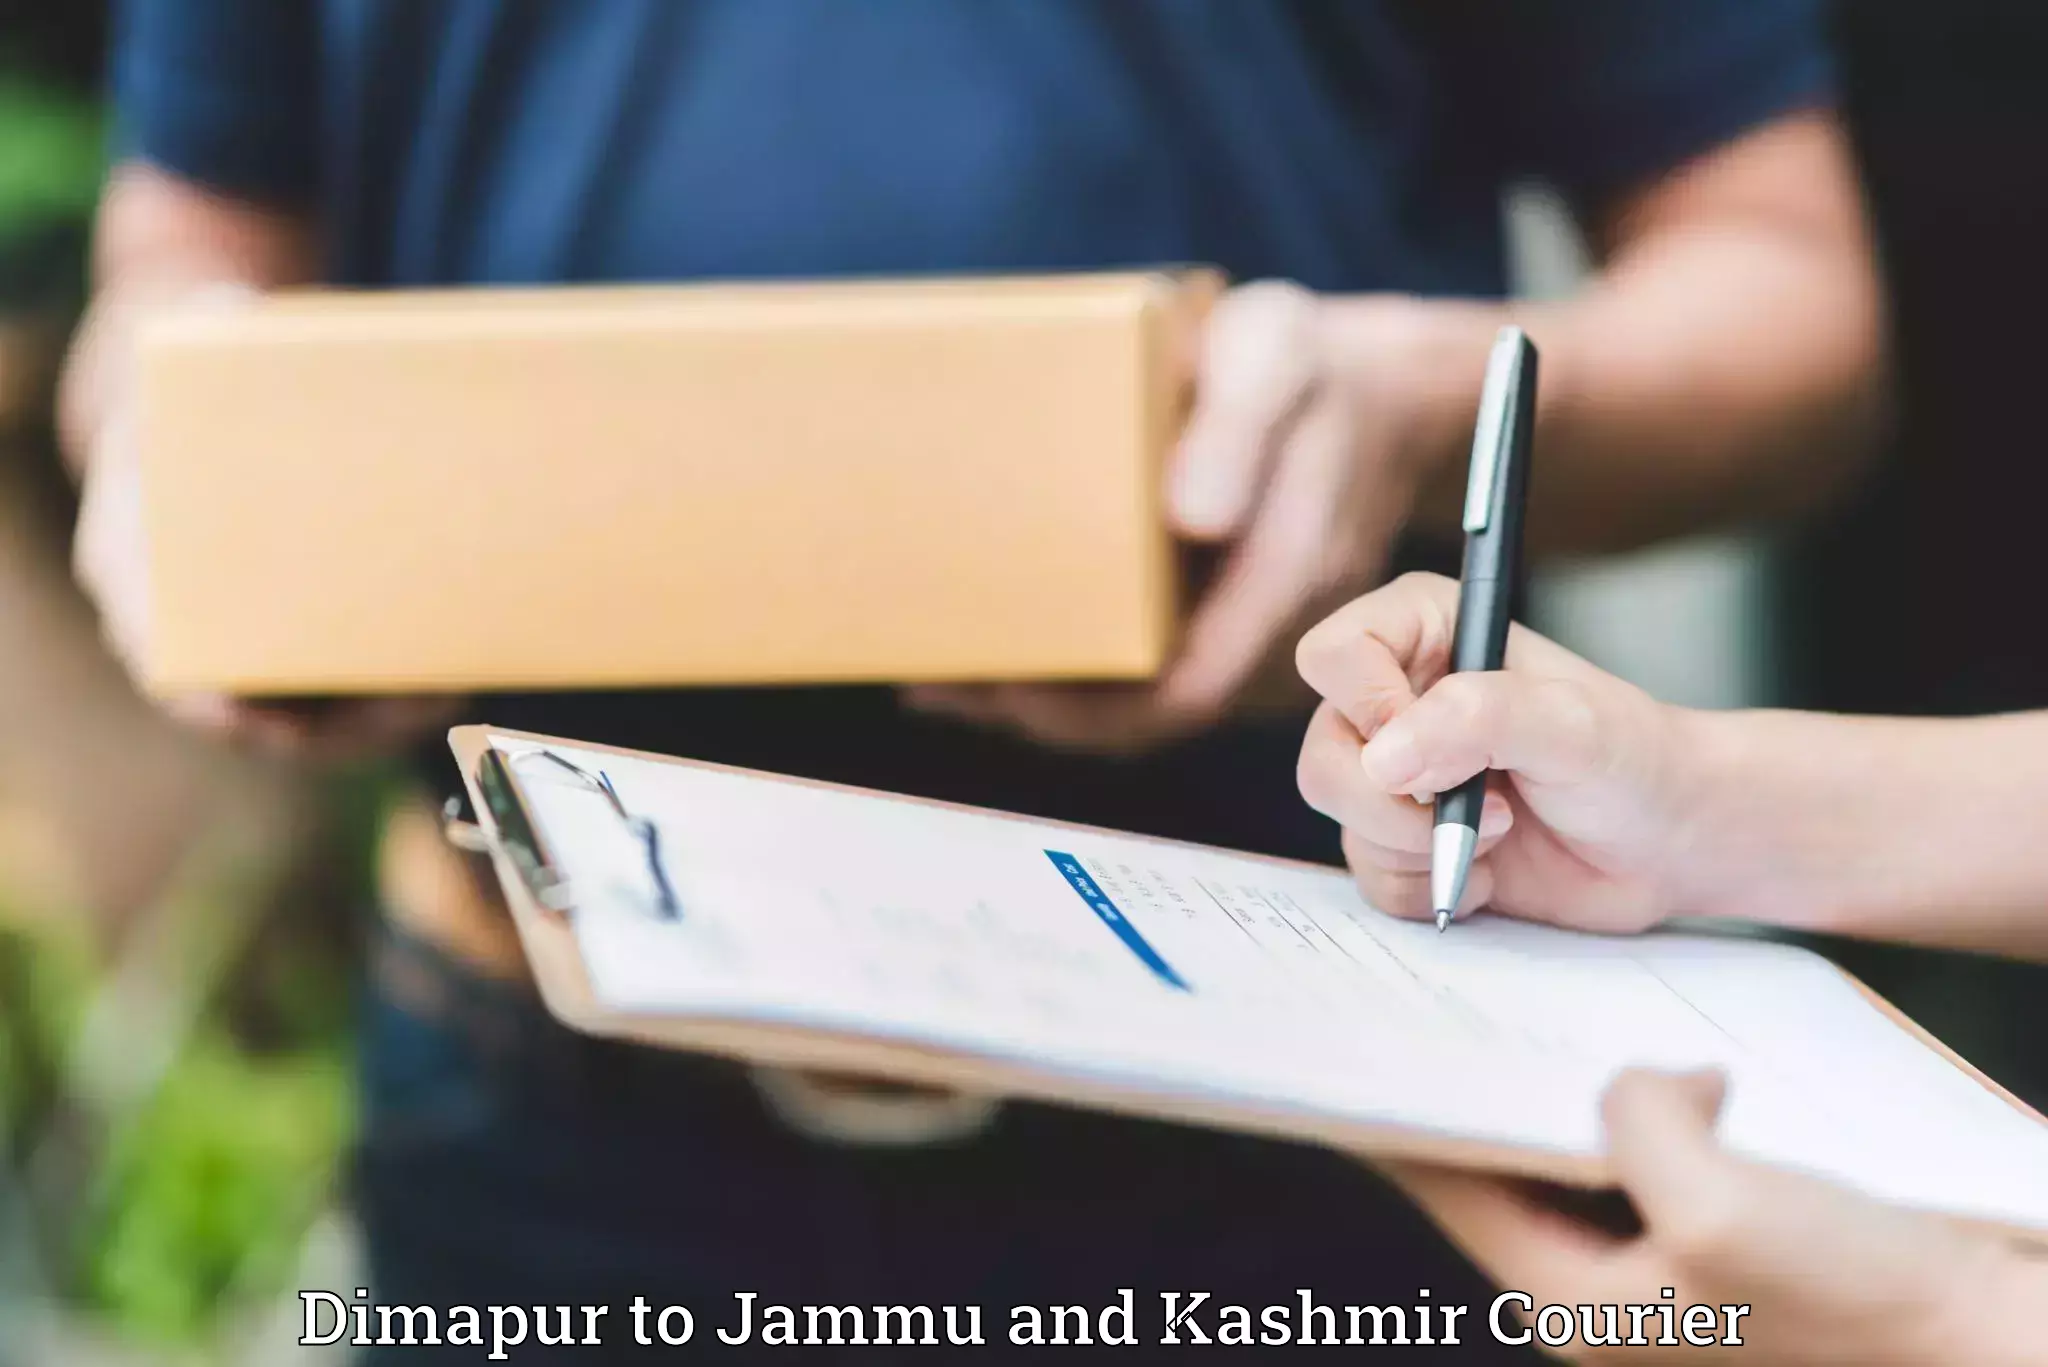 Budget-friendly movers in Dimapur to Srinagar Kashmir